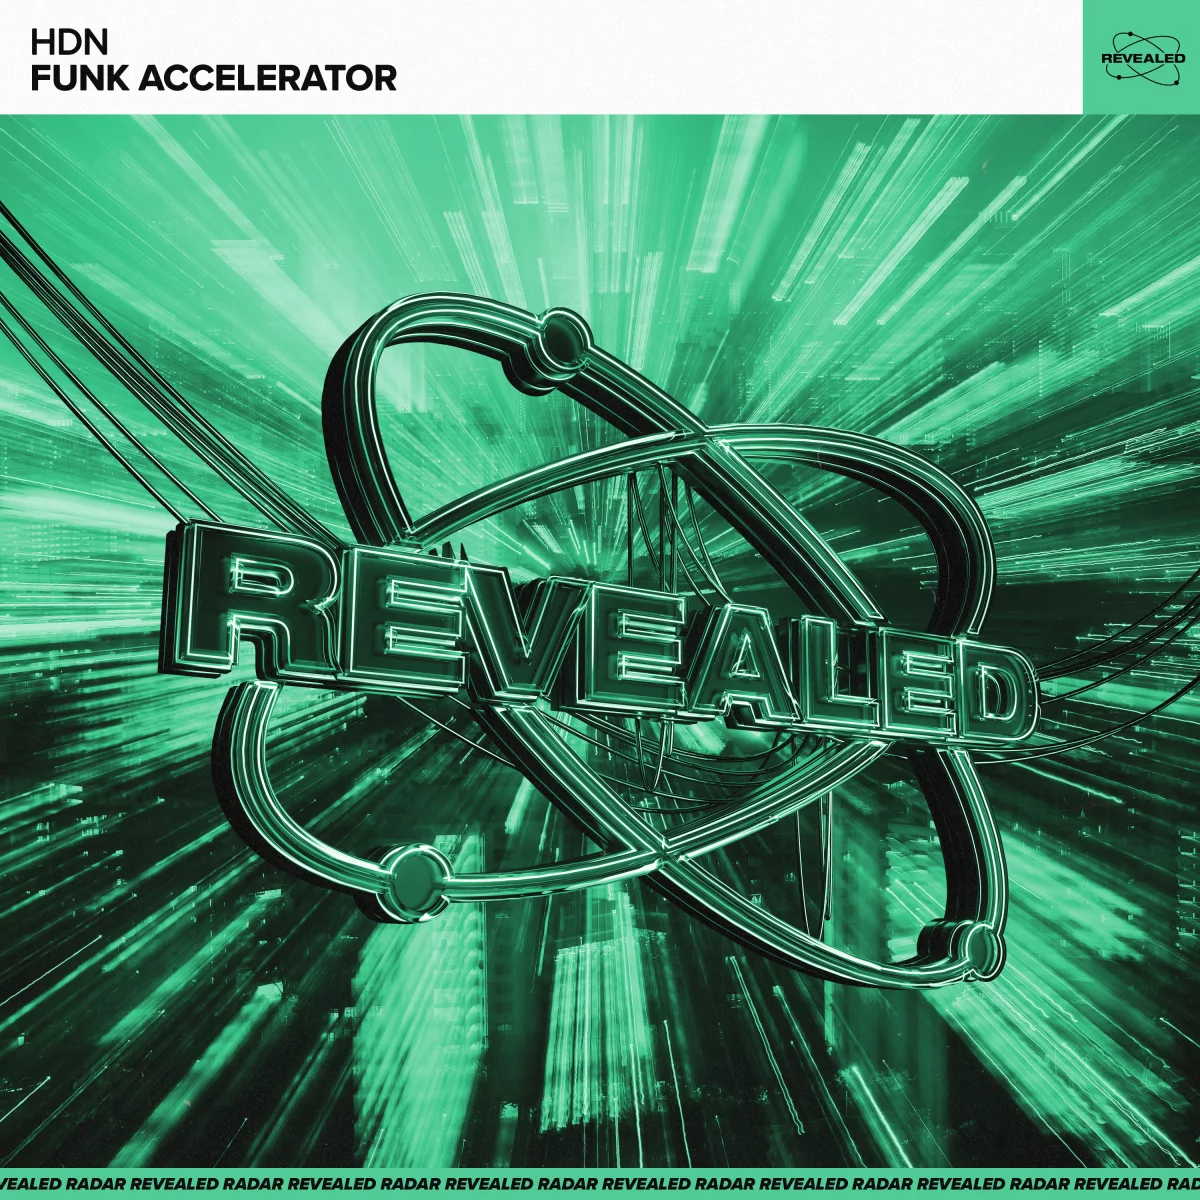 Funk Accelerator - HDN⁠